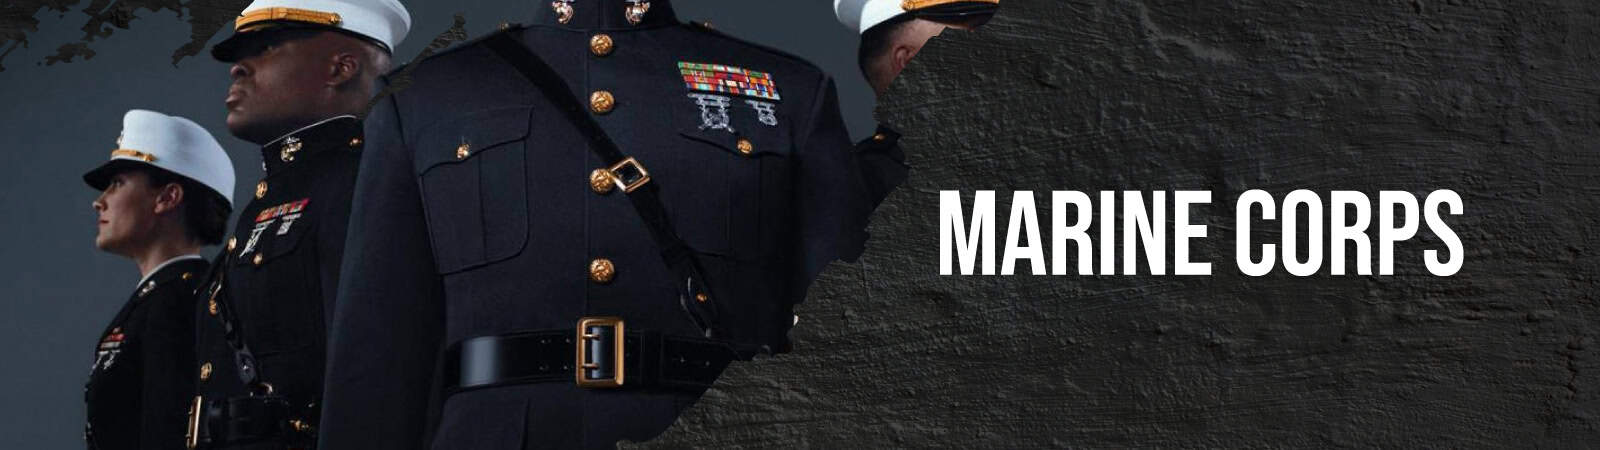 Marine Corps Dress Uniforms